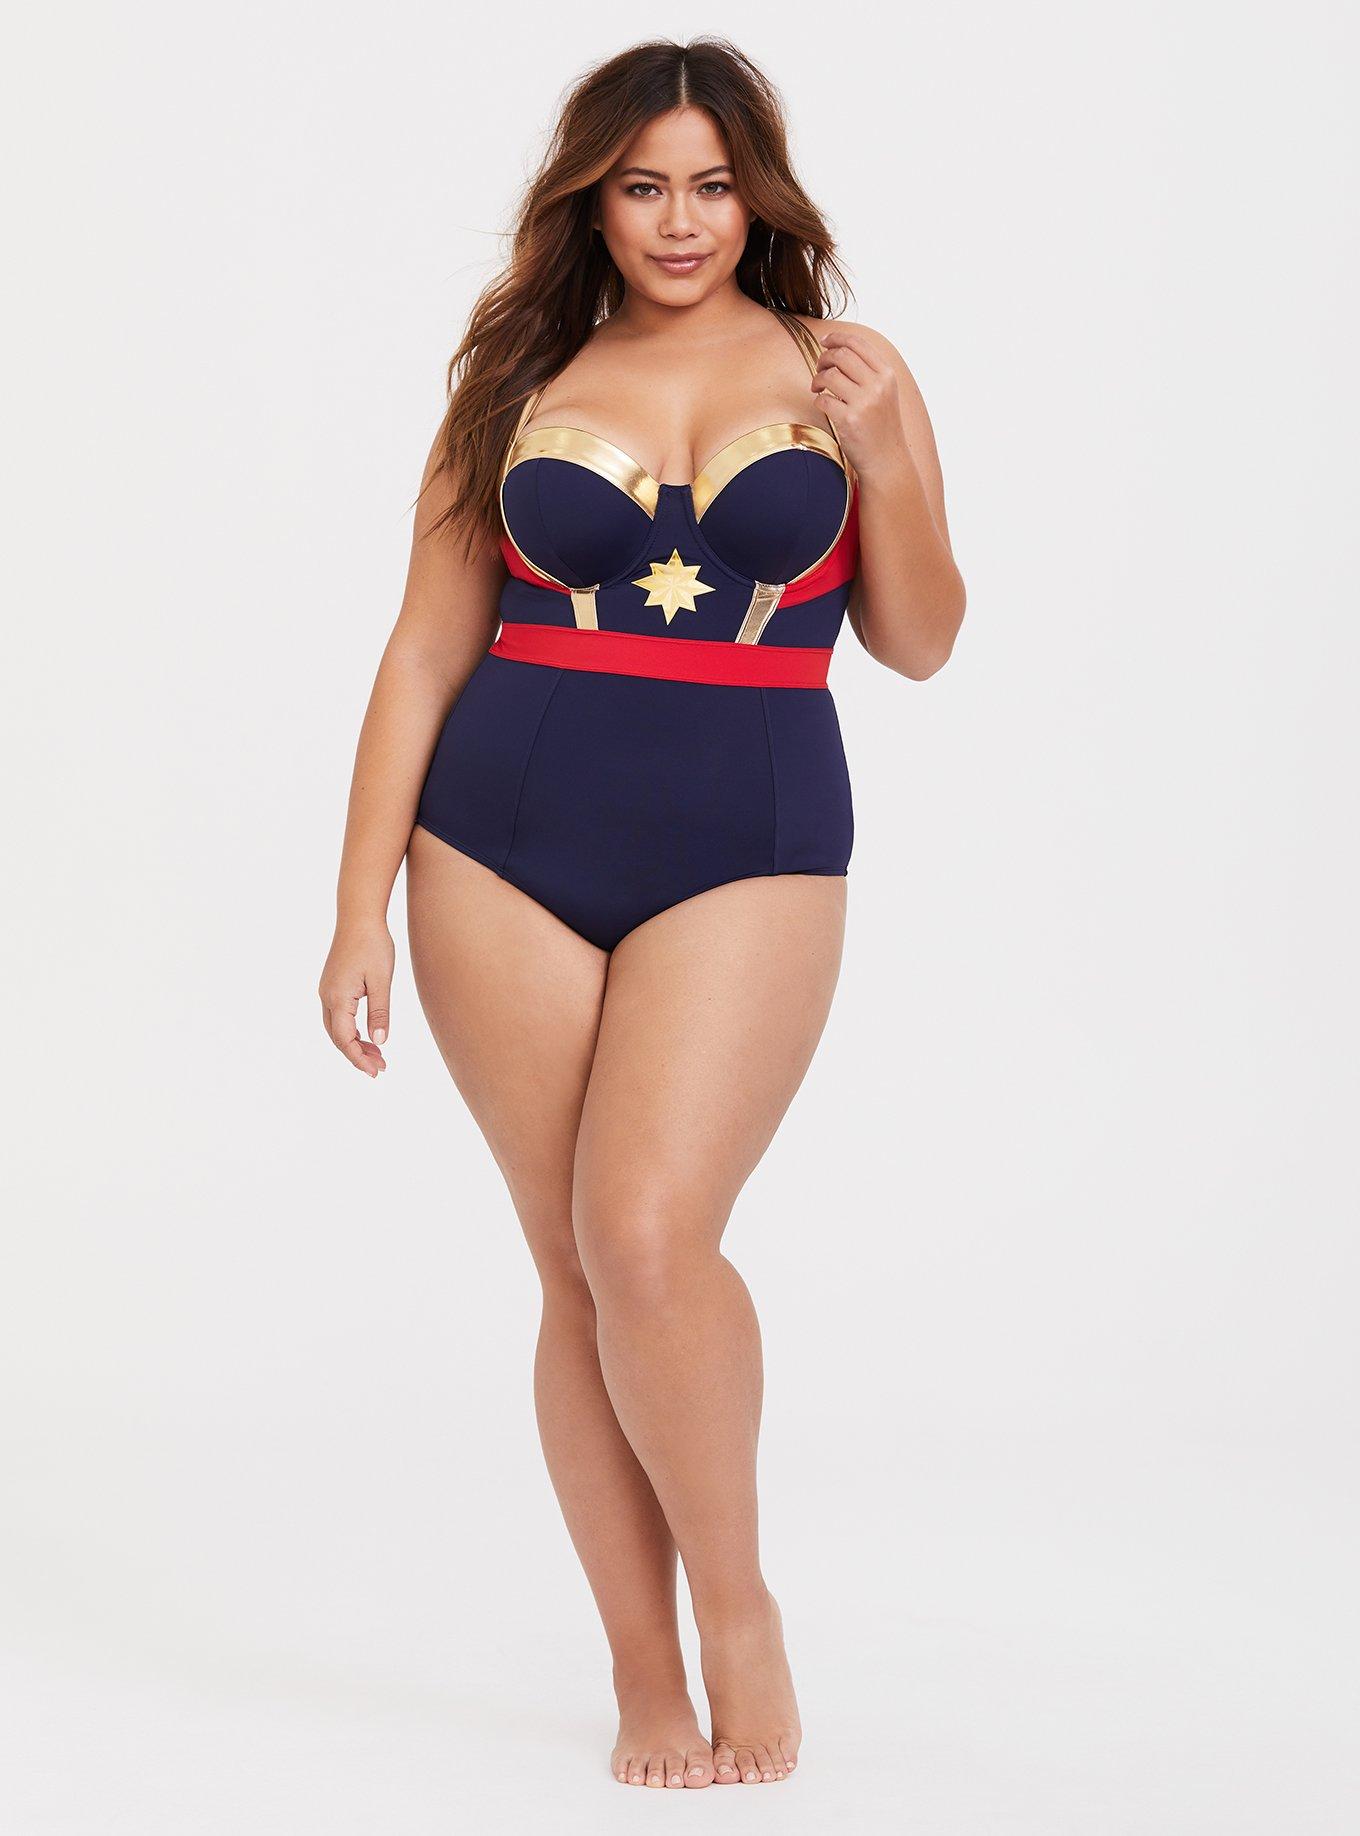 Plus Size - Her Universe Captain Marvel Wireless One-Piece Swimsuit - Torrid